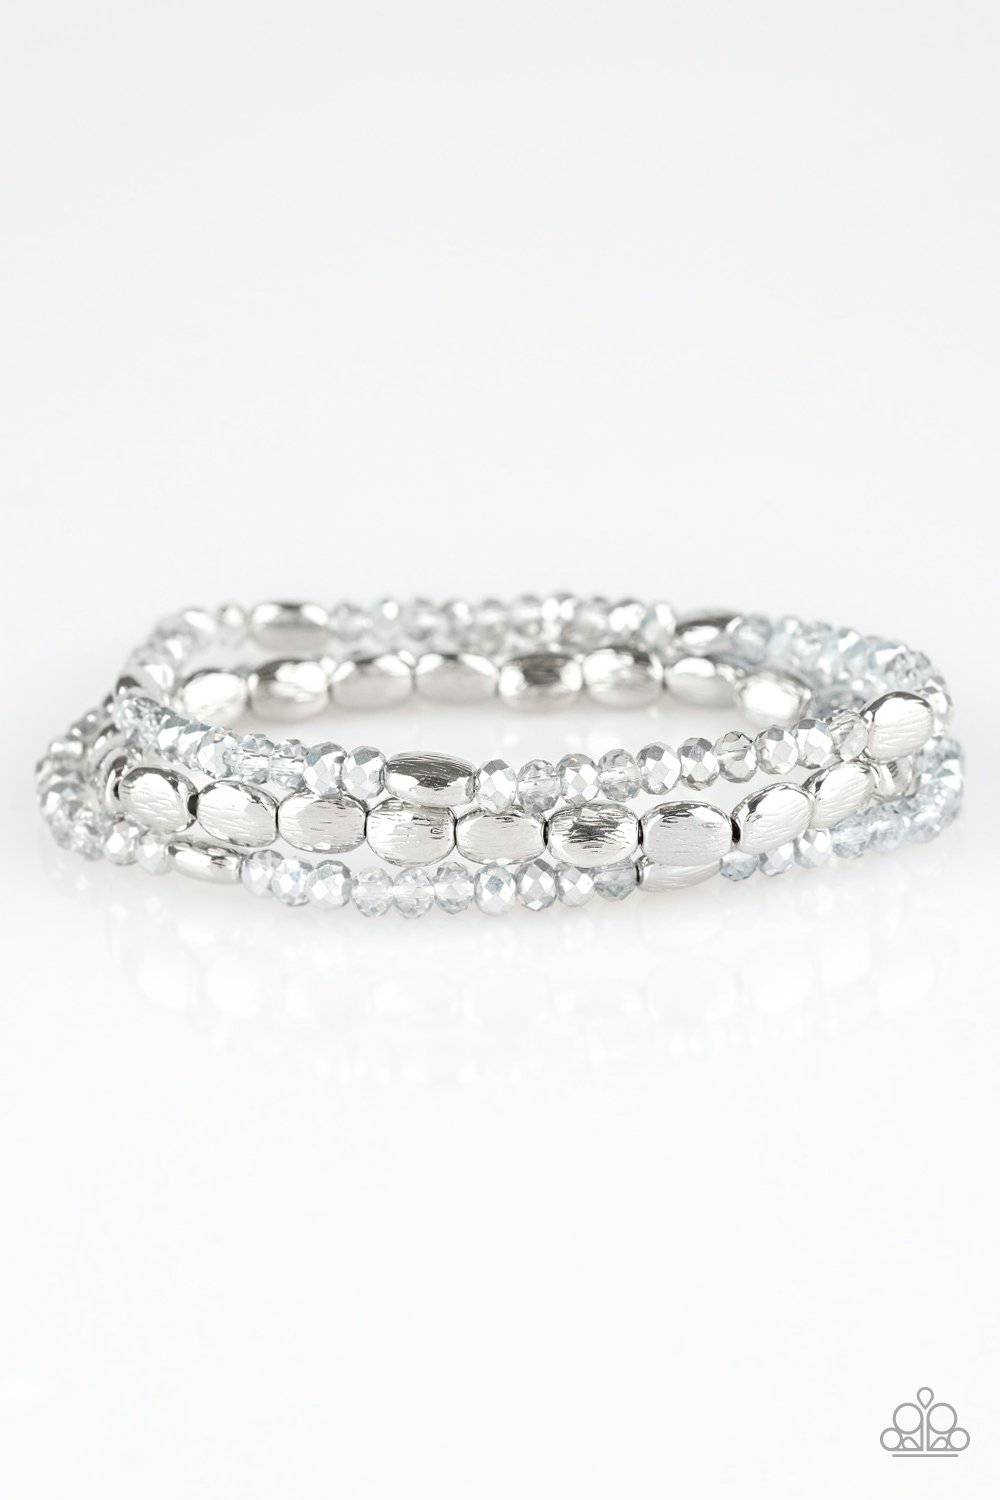 Hello Beautiful - Silver Crystal-Like Beads Bracelet - Paparazzi Accessories - GlaMarous Titi Jewels